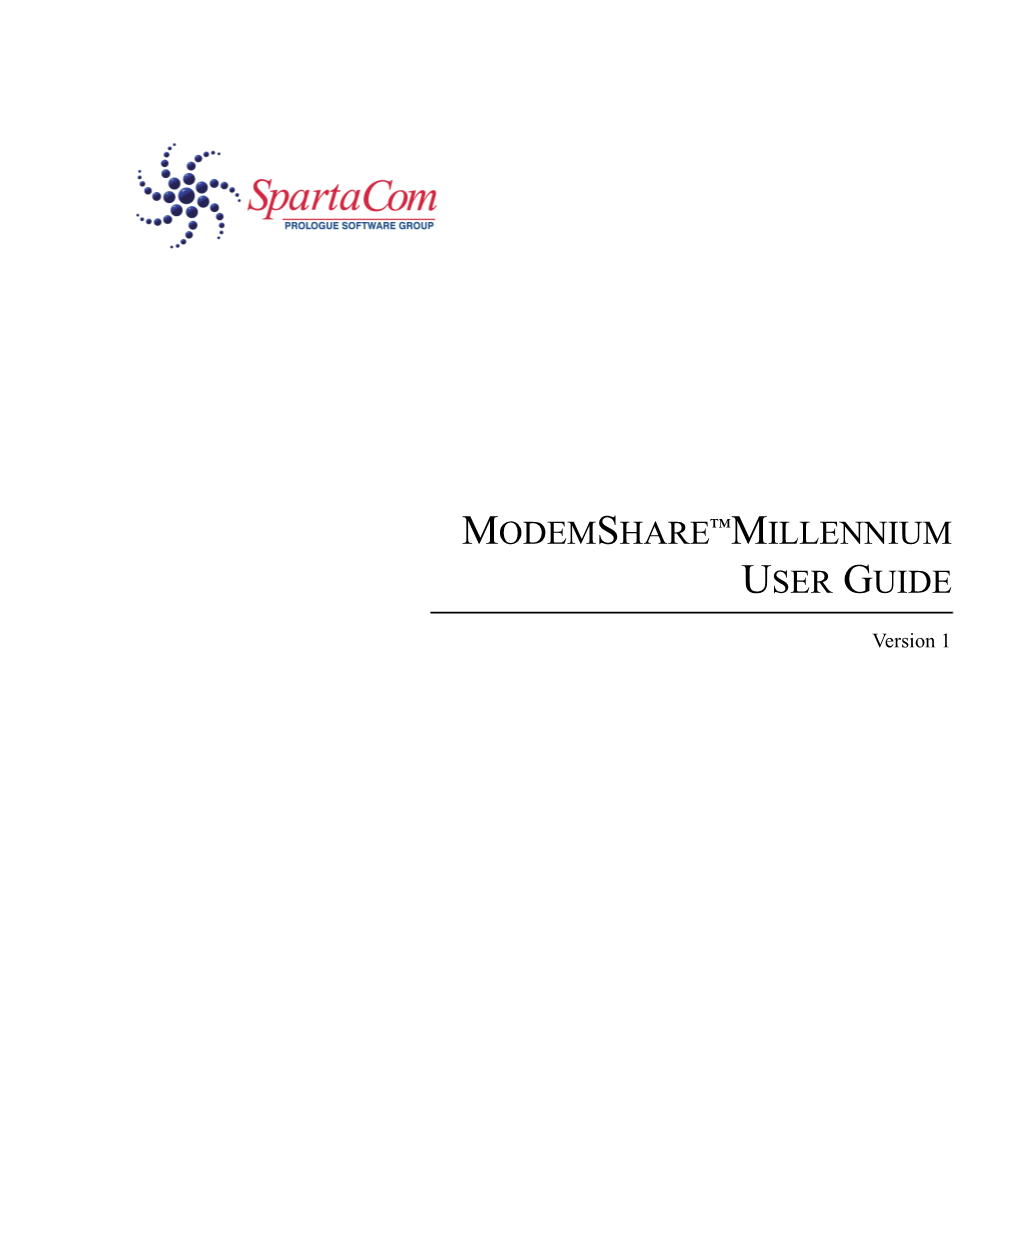 Modemshare™Millennium User Guide